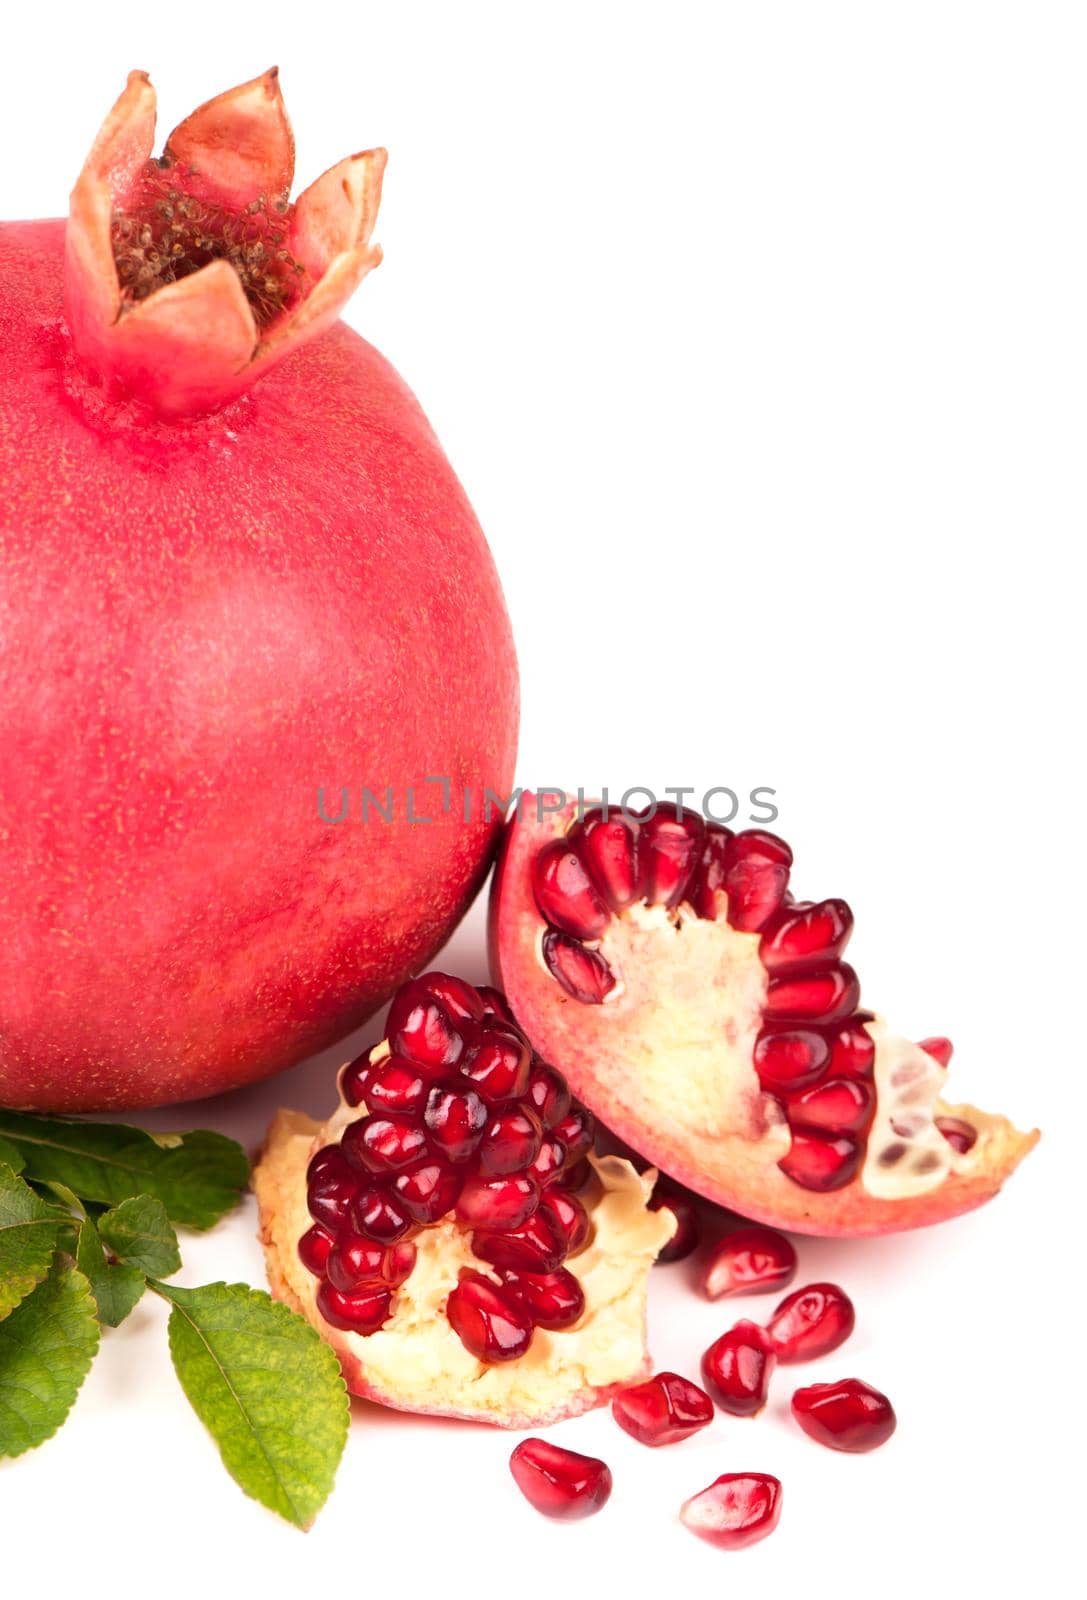 Fresh, juicy pomegranate on a white background